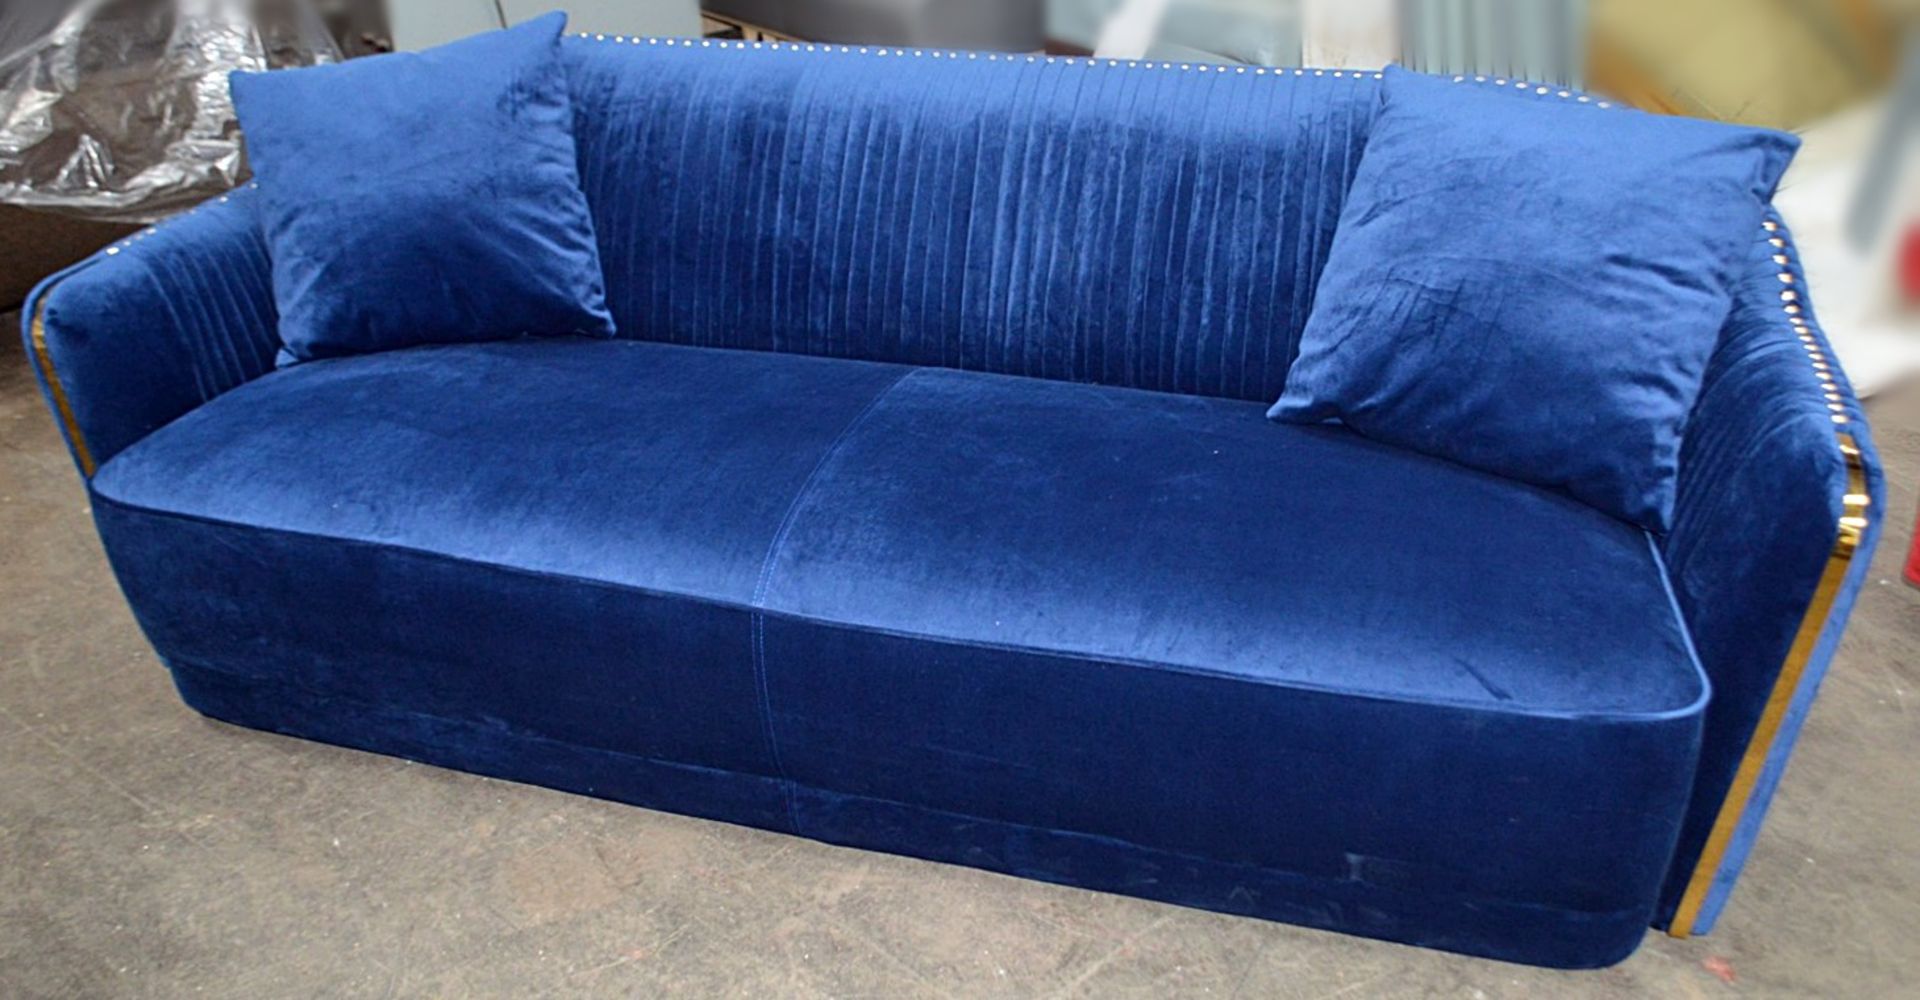 1 x Bespoke Blue Velvet Button-Back Sofa In A Rich Royal Blue Velvet With Detailing In Gold - Image 2 of 8